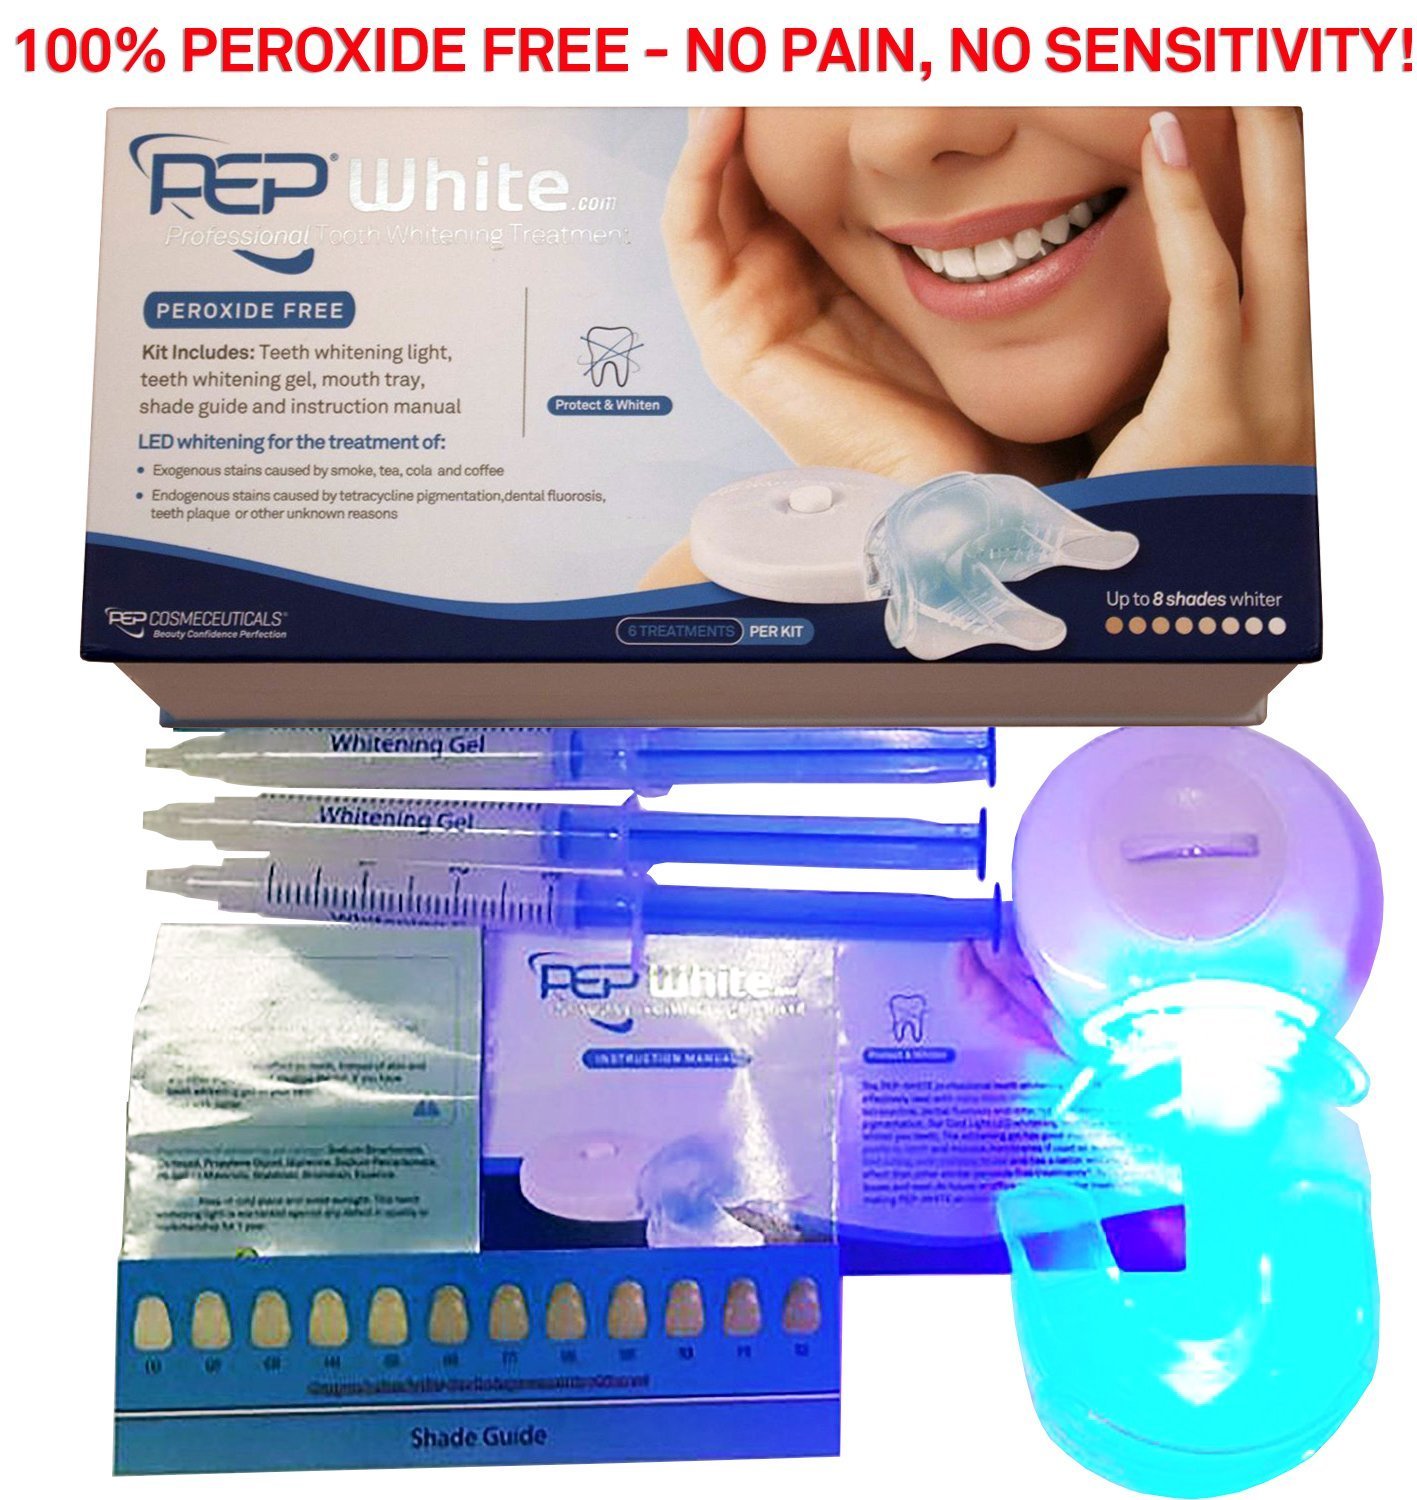 PEP-WHITE - ZERO PEROXIDE Teeth Whitening Kit